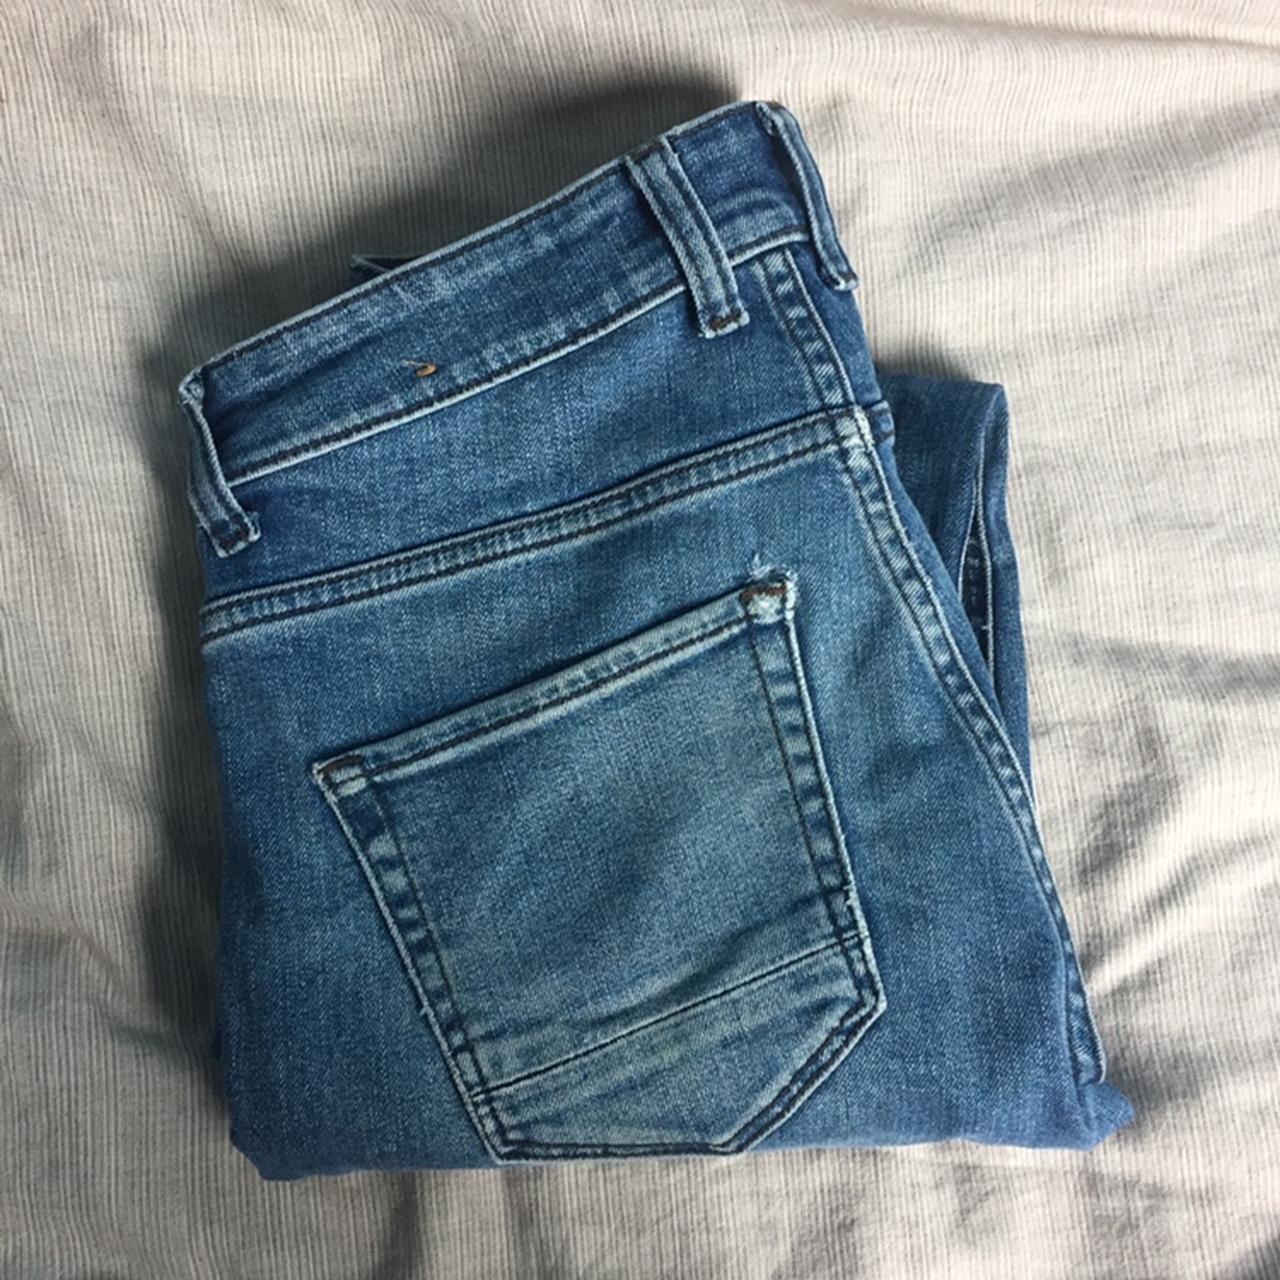 Sick vintage blue denim fade jeans with stitched... - Depop